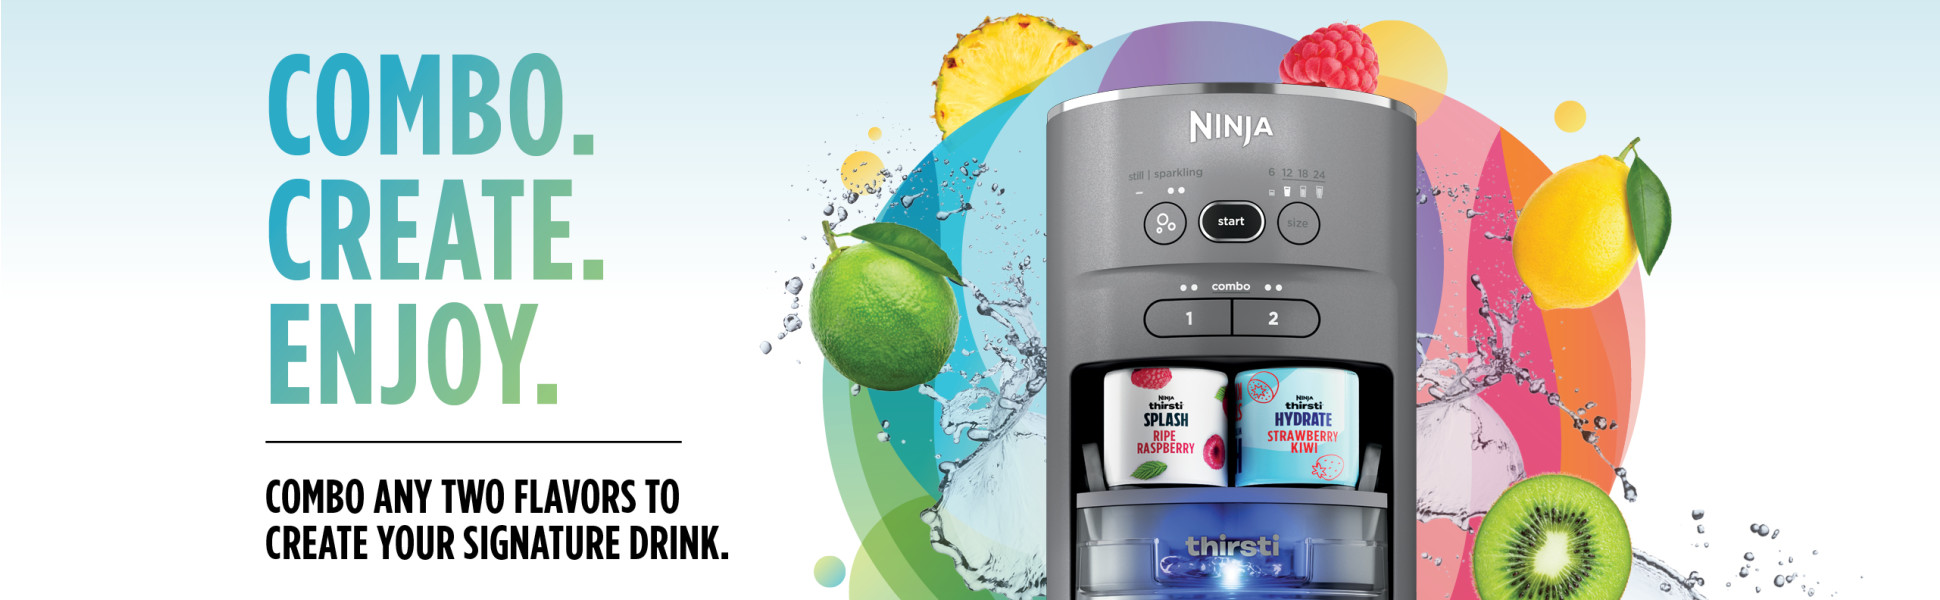 New Ninja Thirsti Drink System WC1002